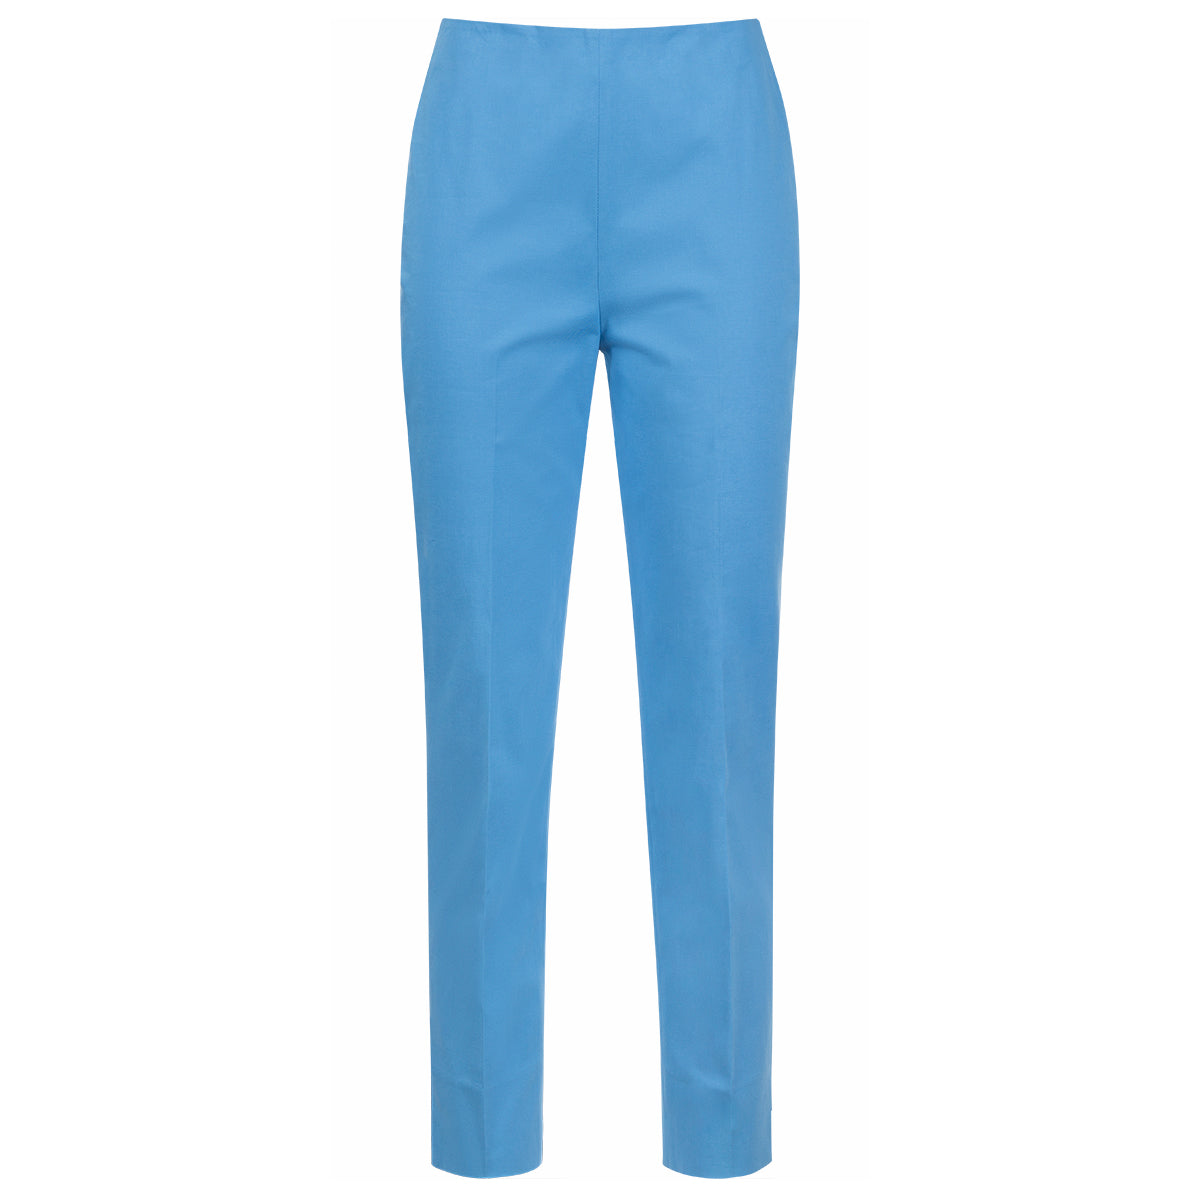 Victoria Beckham 152520 Women's Wool Trousers Pale Blue Sz. 10 | eBay